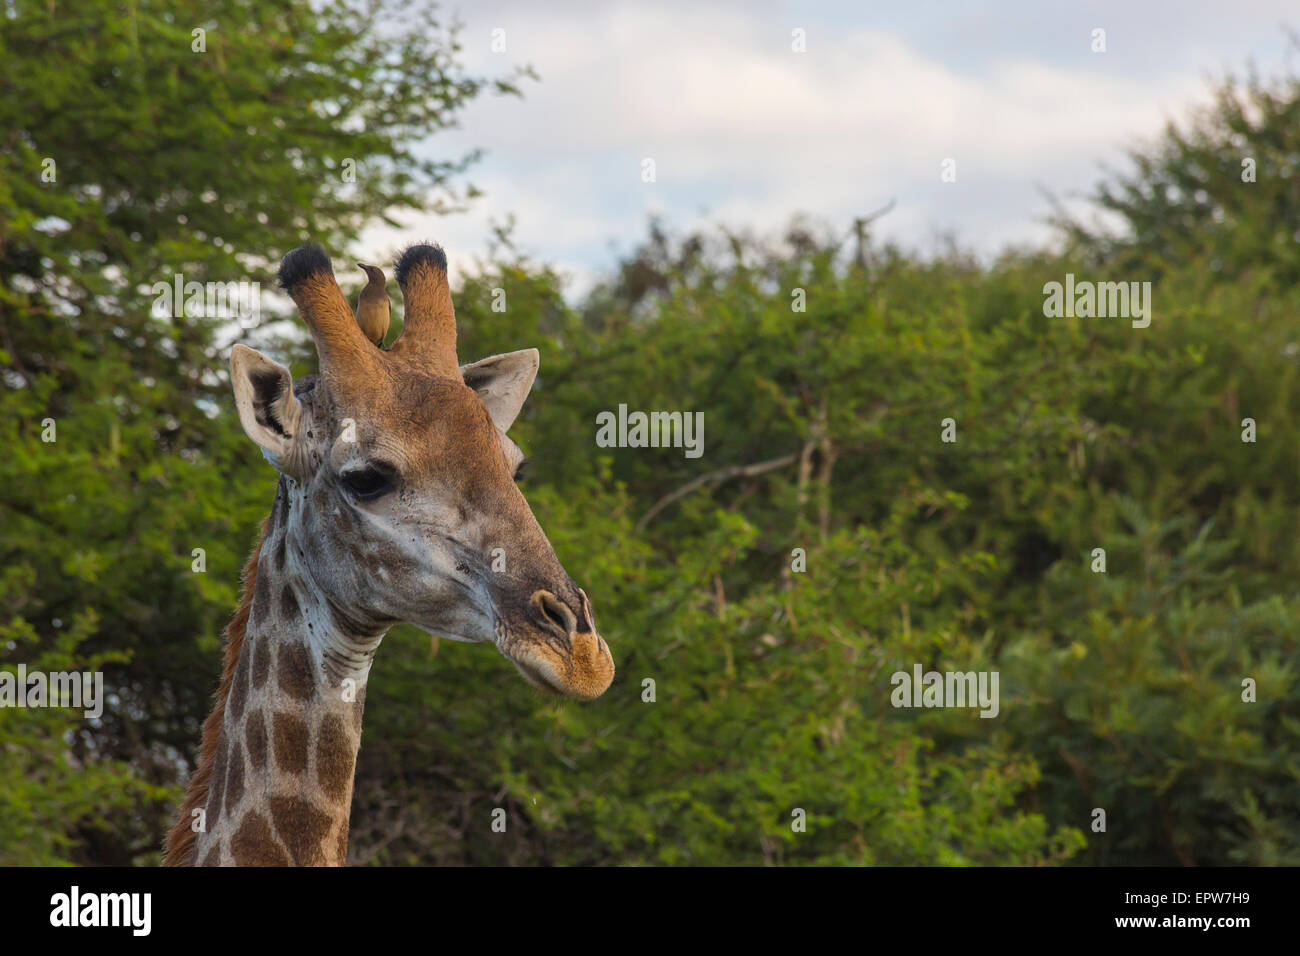 Giraffe close up in the bush Stock Photo